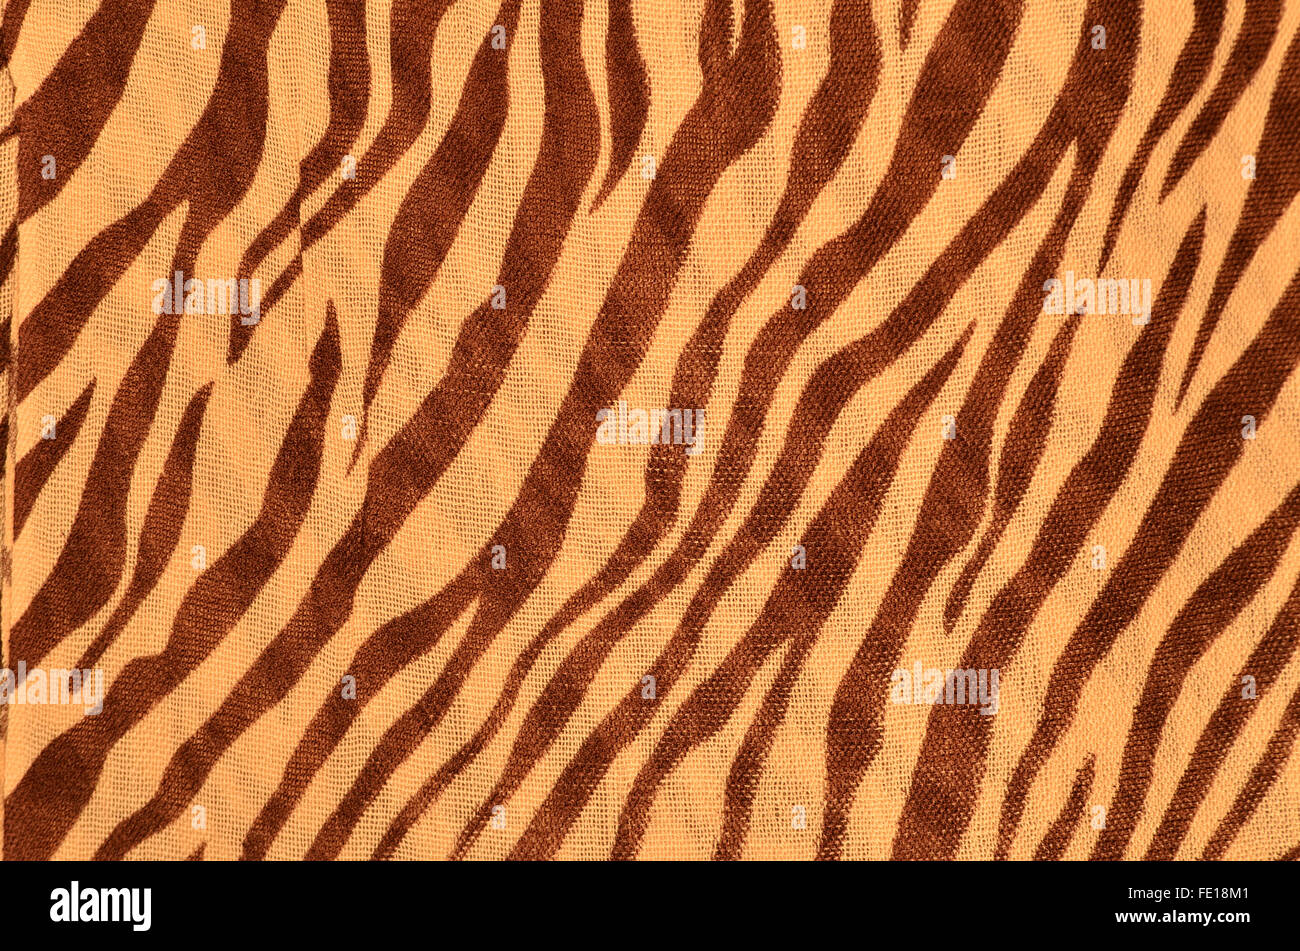 Tela de tigre fotografías e imágenes de alta resolución - Alamy